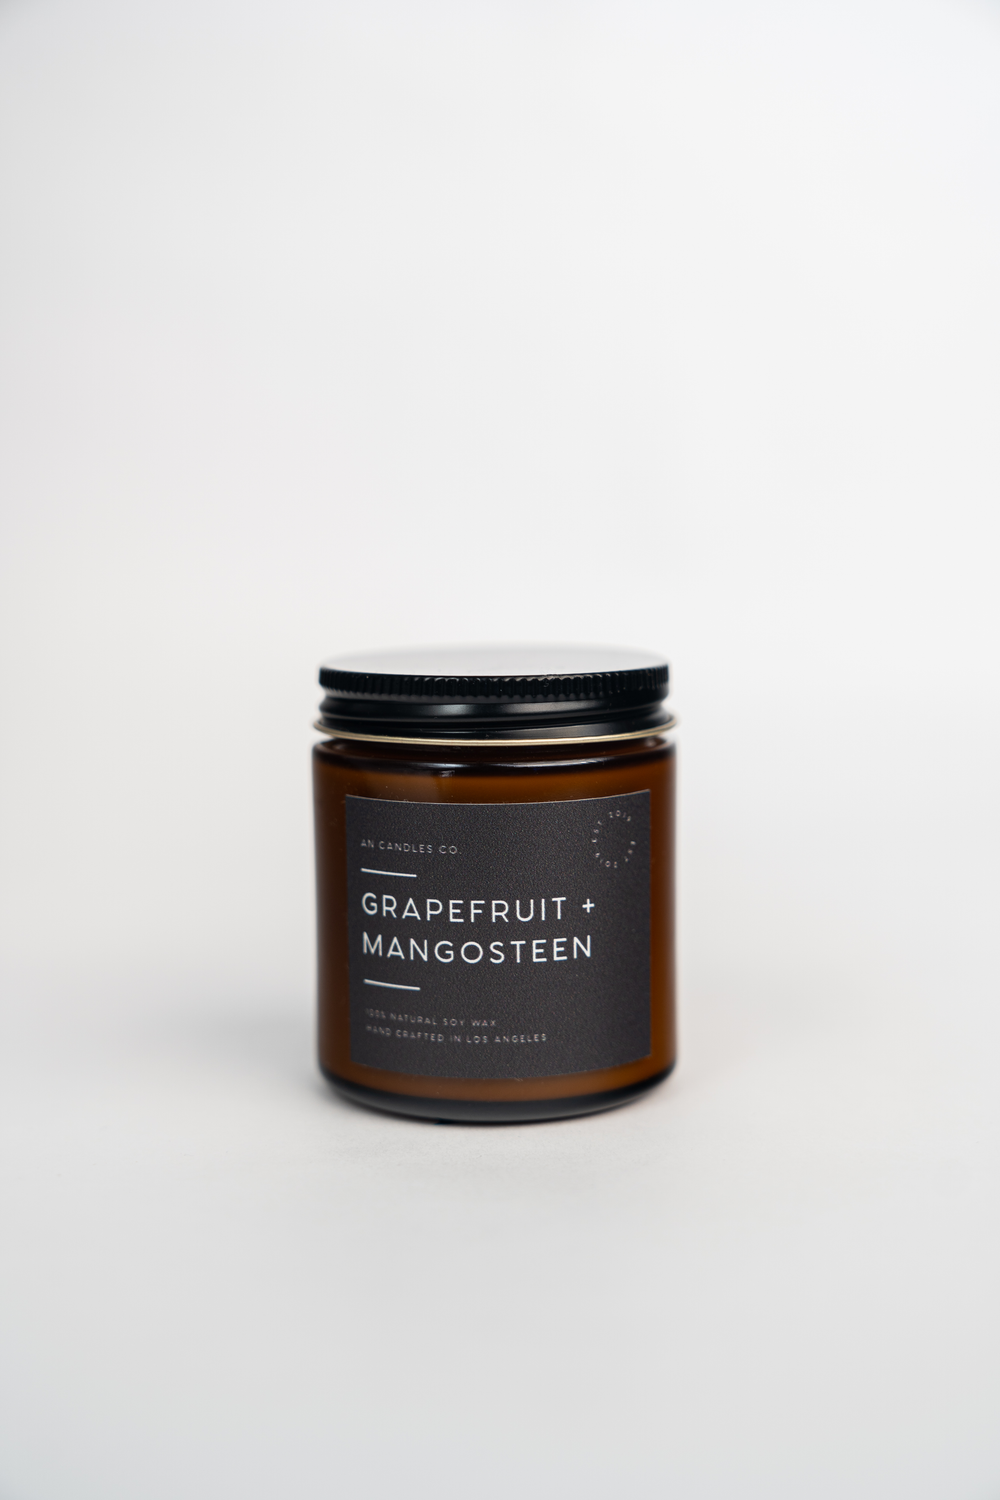 Grapefruit + Mangosteen Candle